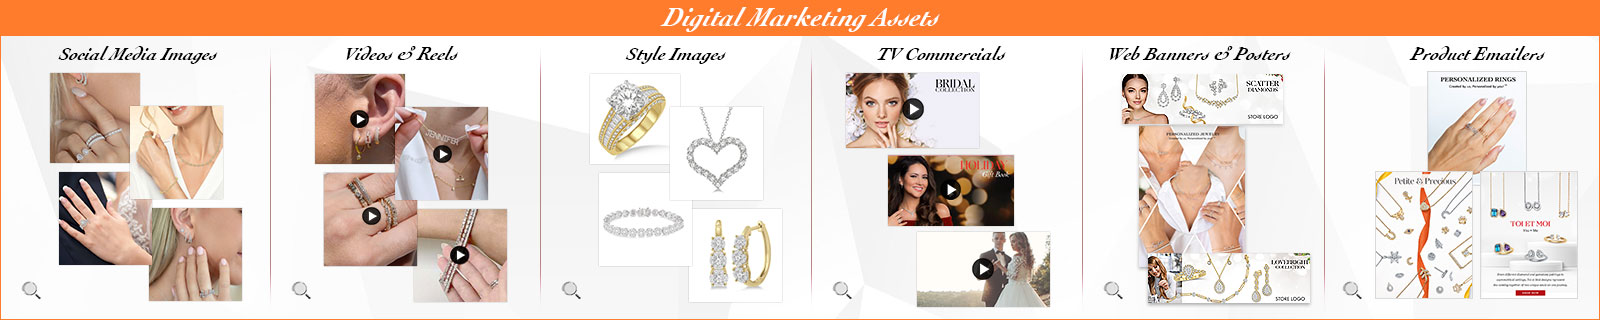 Digital Marketing Assets